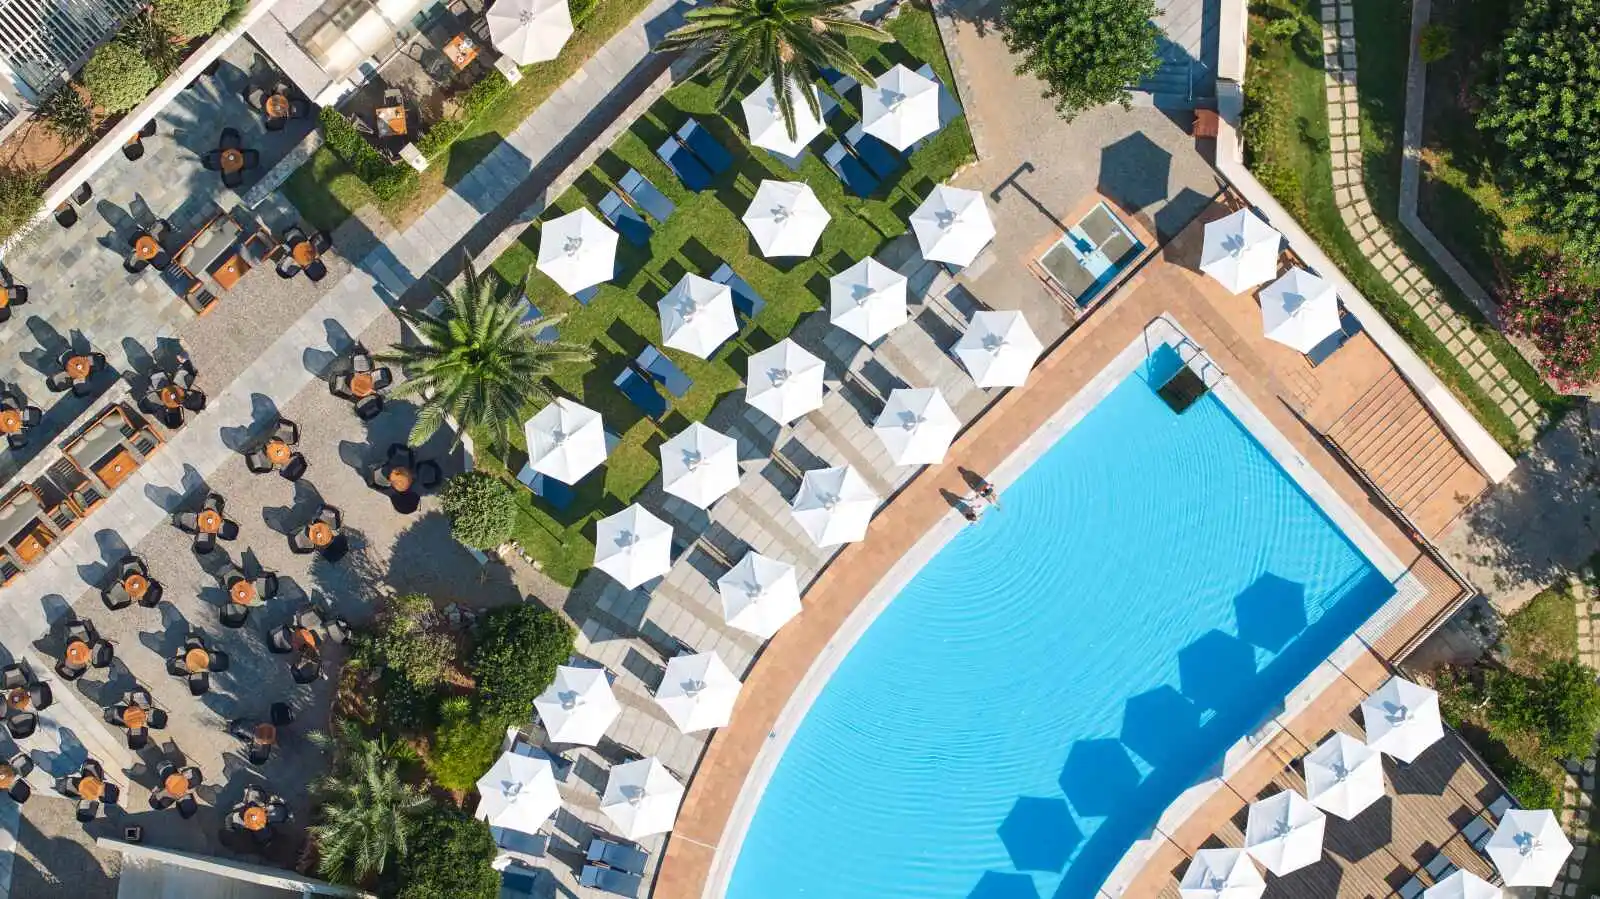 Crète - Heraklion - Grèce - Iles grecques - Hôtel Agapi Beach Resort 4*